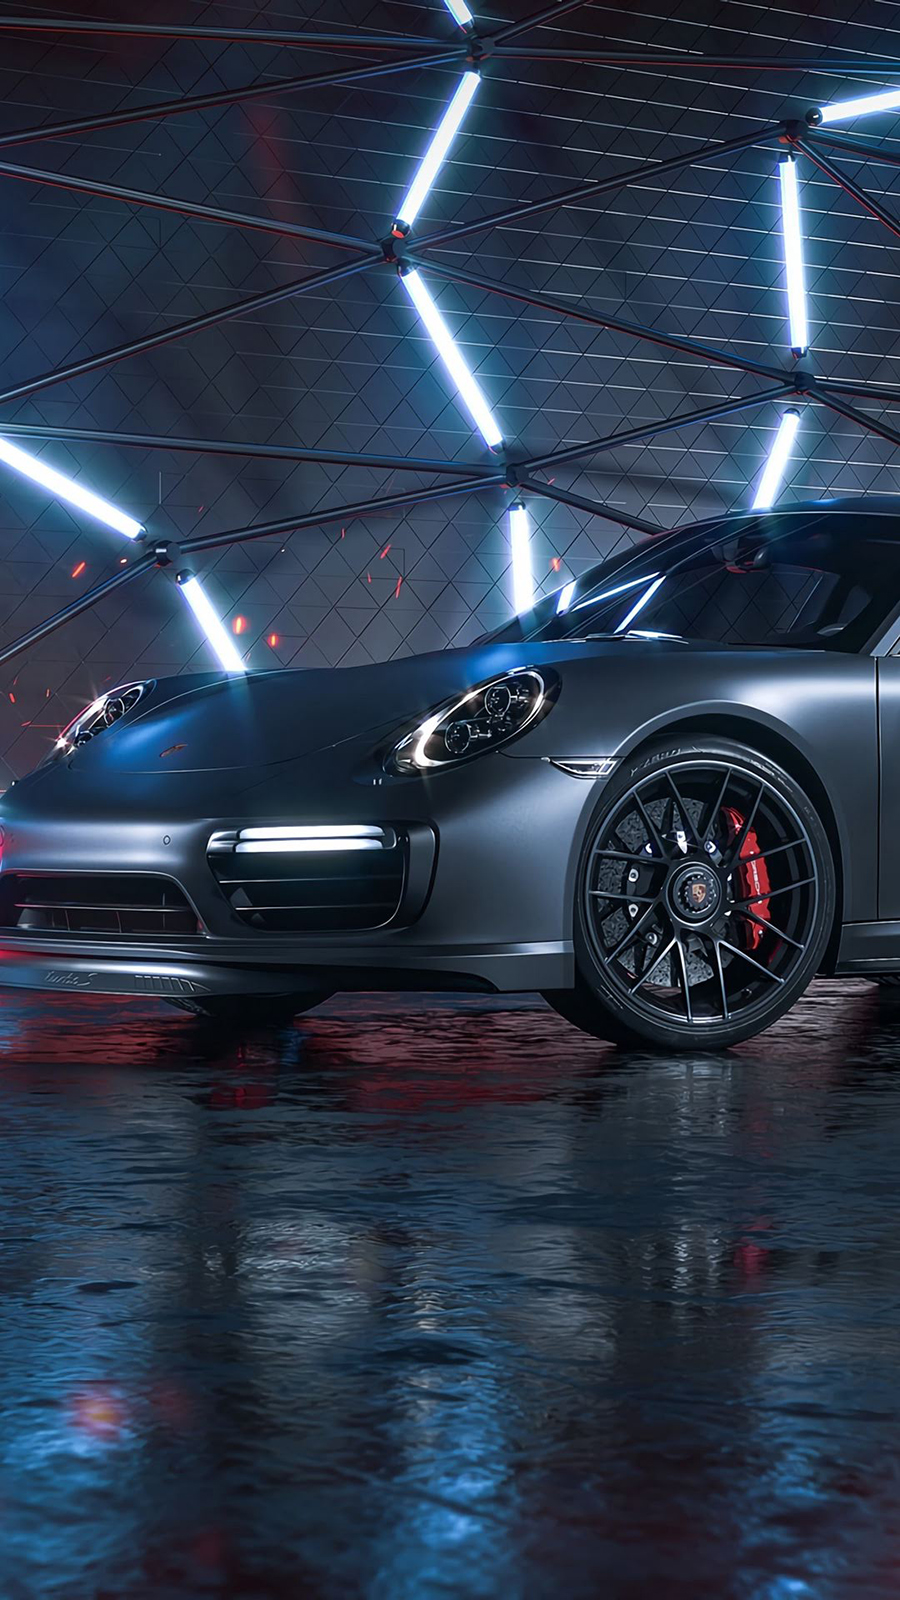 Porsche Full HD Wallpapers Free Download